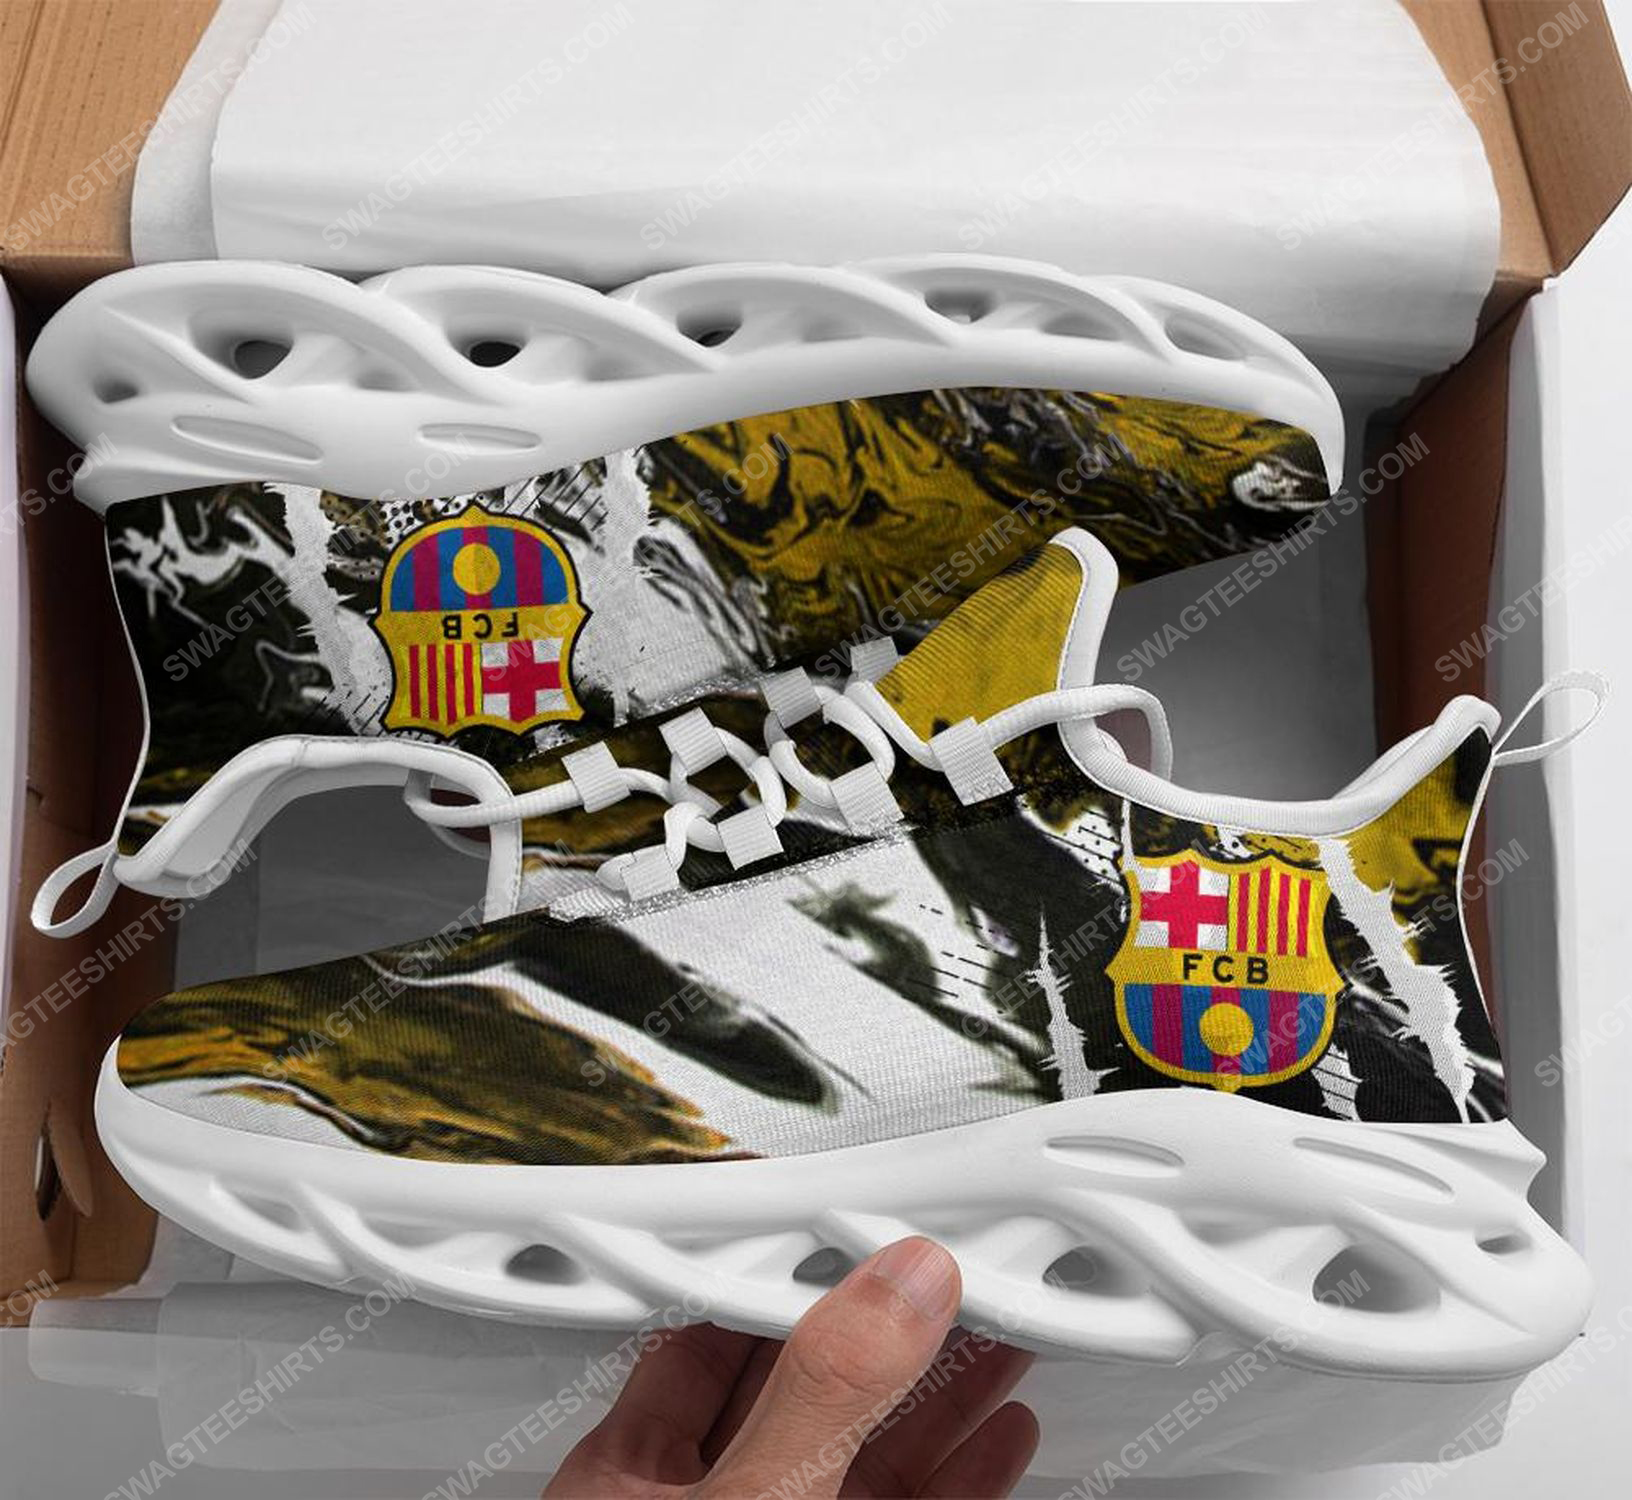 Football club barcelona max soul shoes 1 - Copy (2)